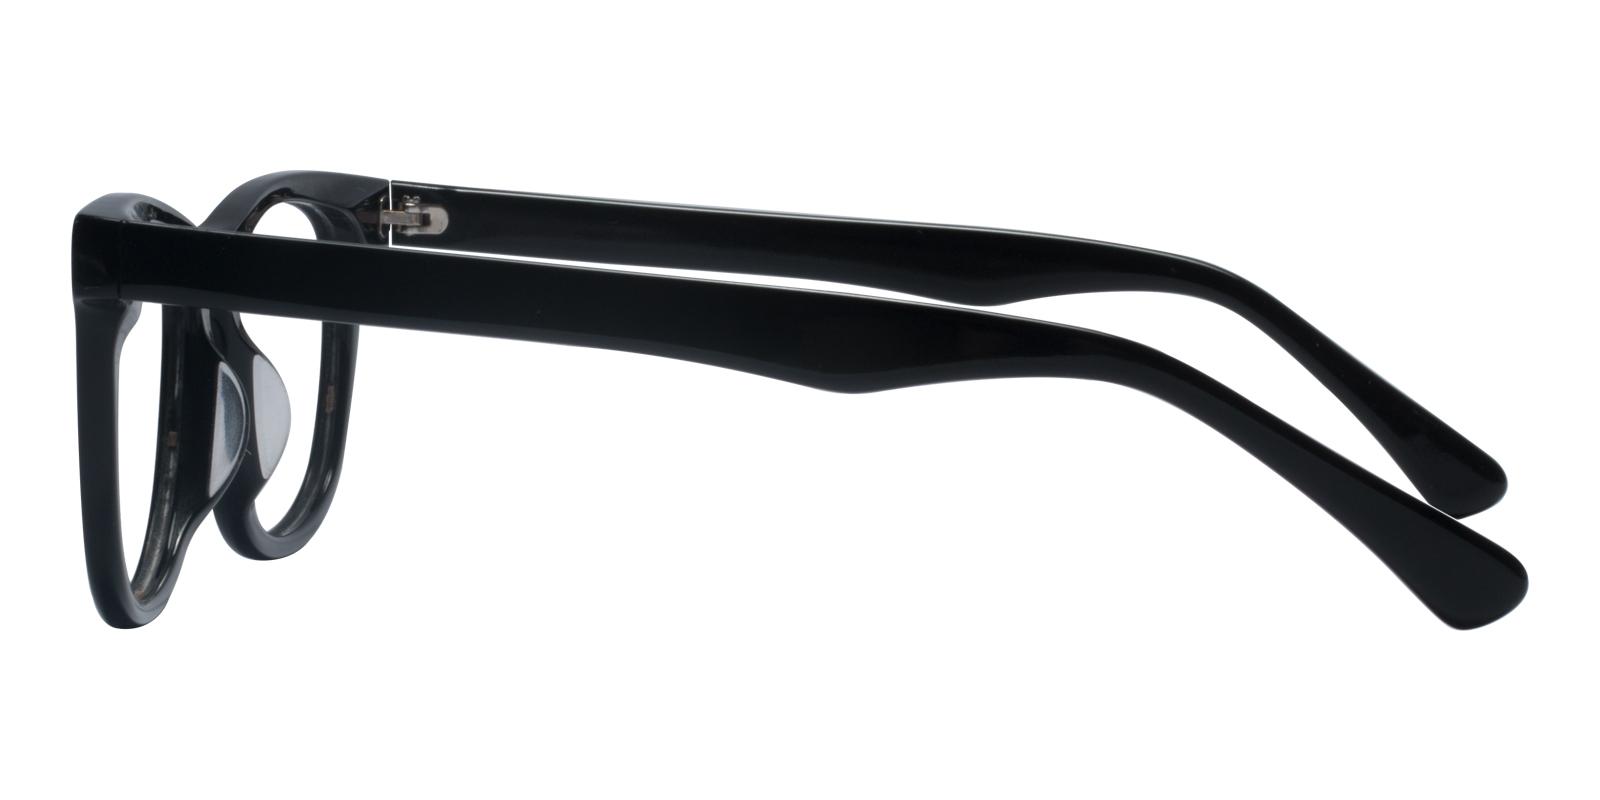 Standie Black Acetate Eyeglasses , UniversalBridgeFit Frames from ABBE Glasses